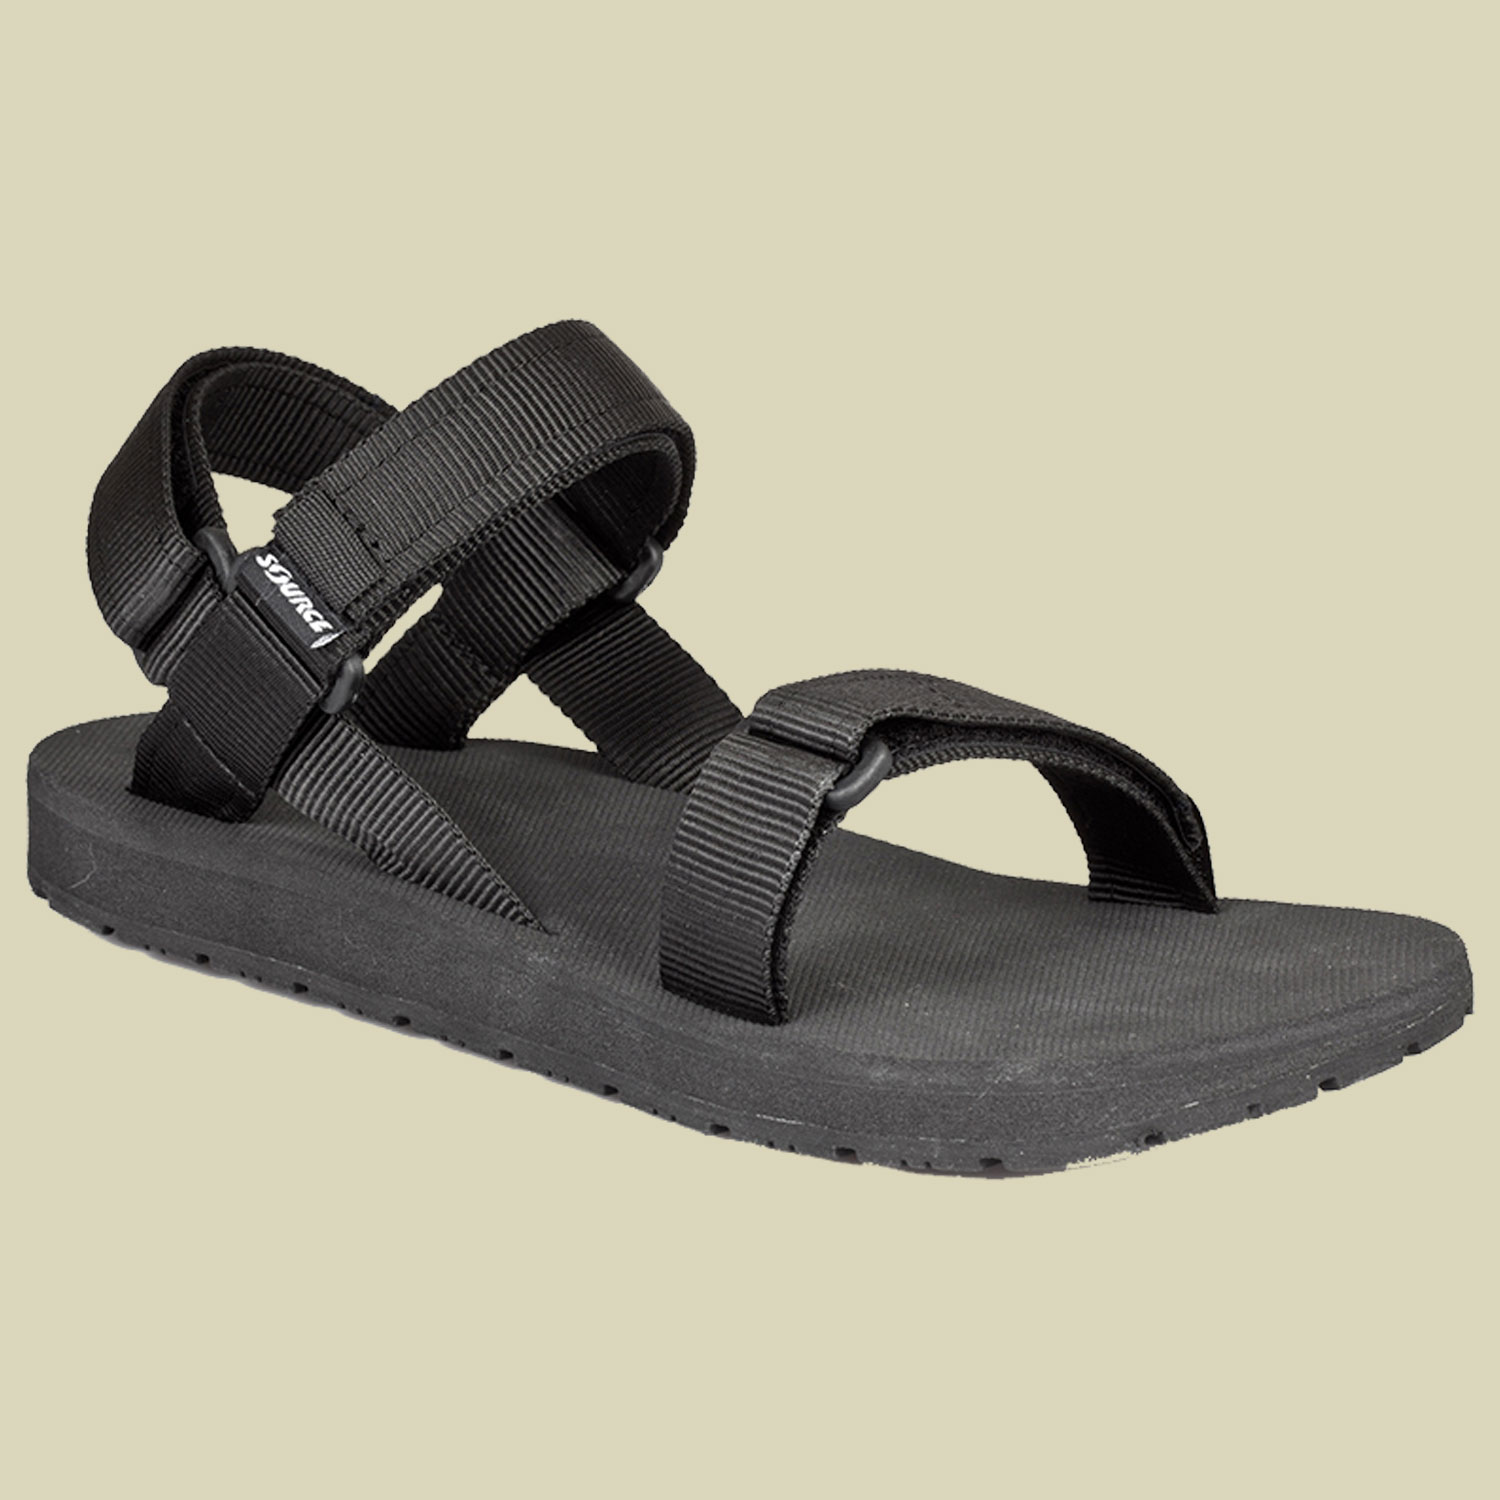 Classic Sandale Men Größe 42 Farbe black